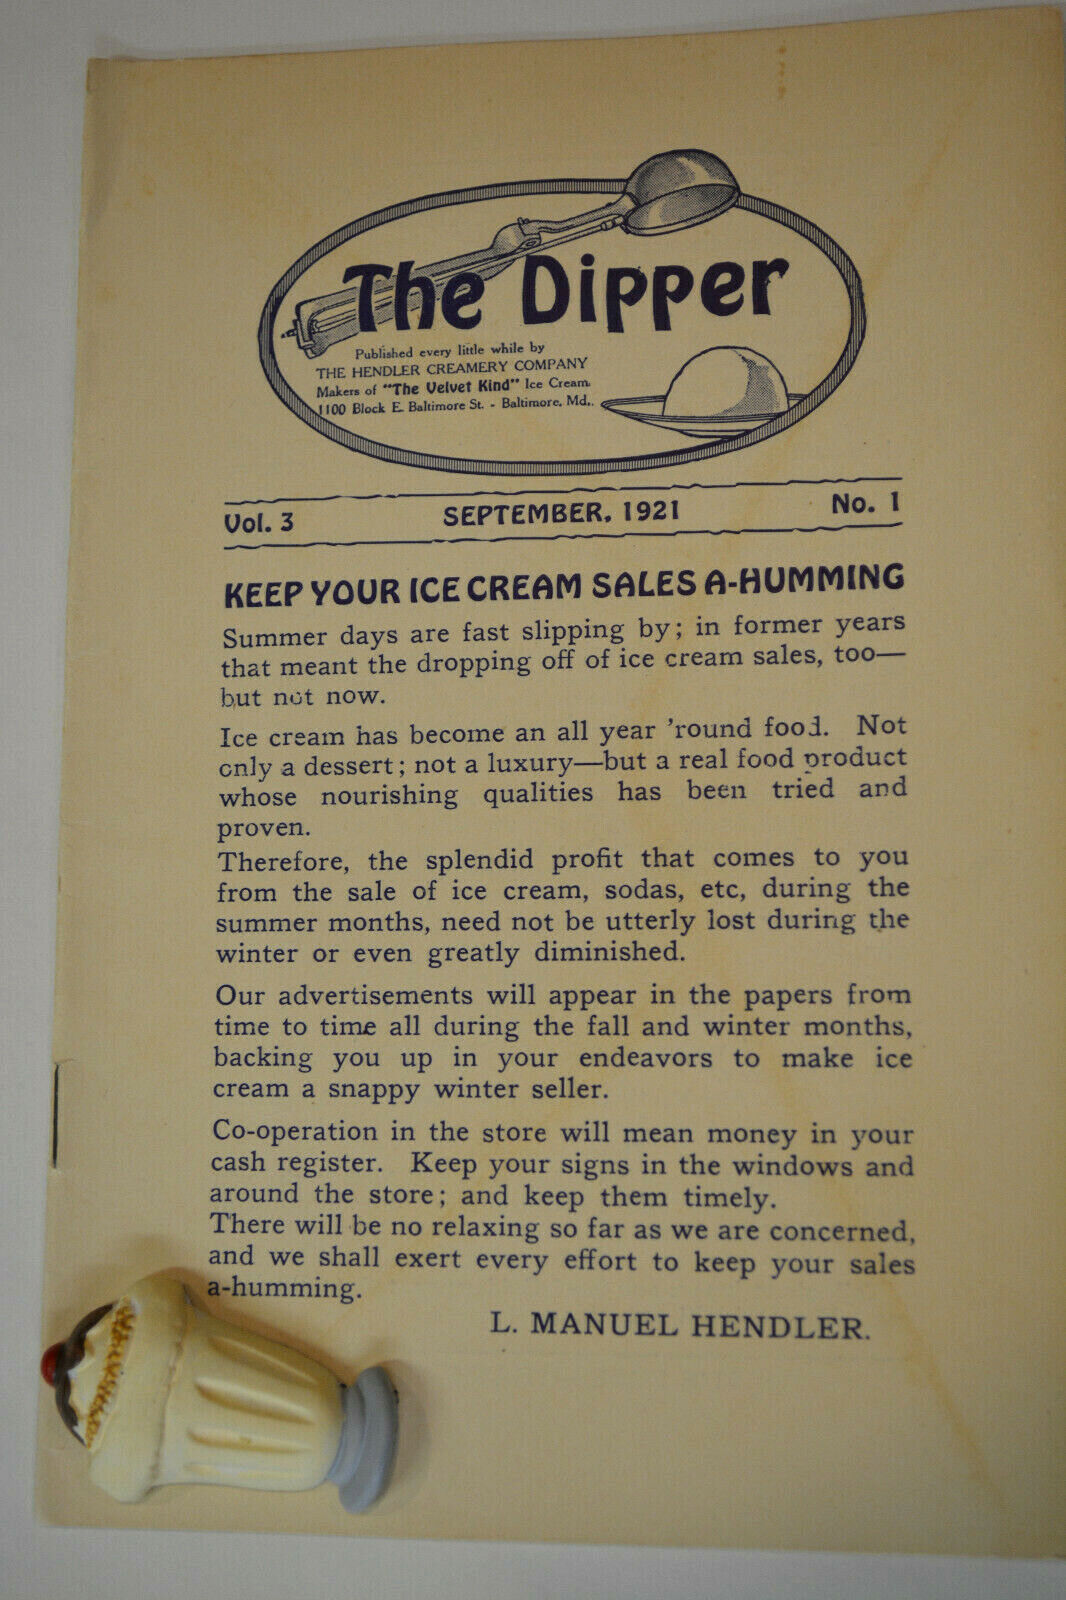 Sept 1921 The Dipper Magazine, Hendler Creamery Co, Baltimore, MD, Vol 3, #1